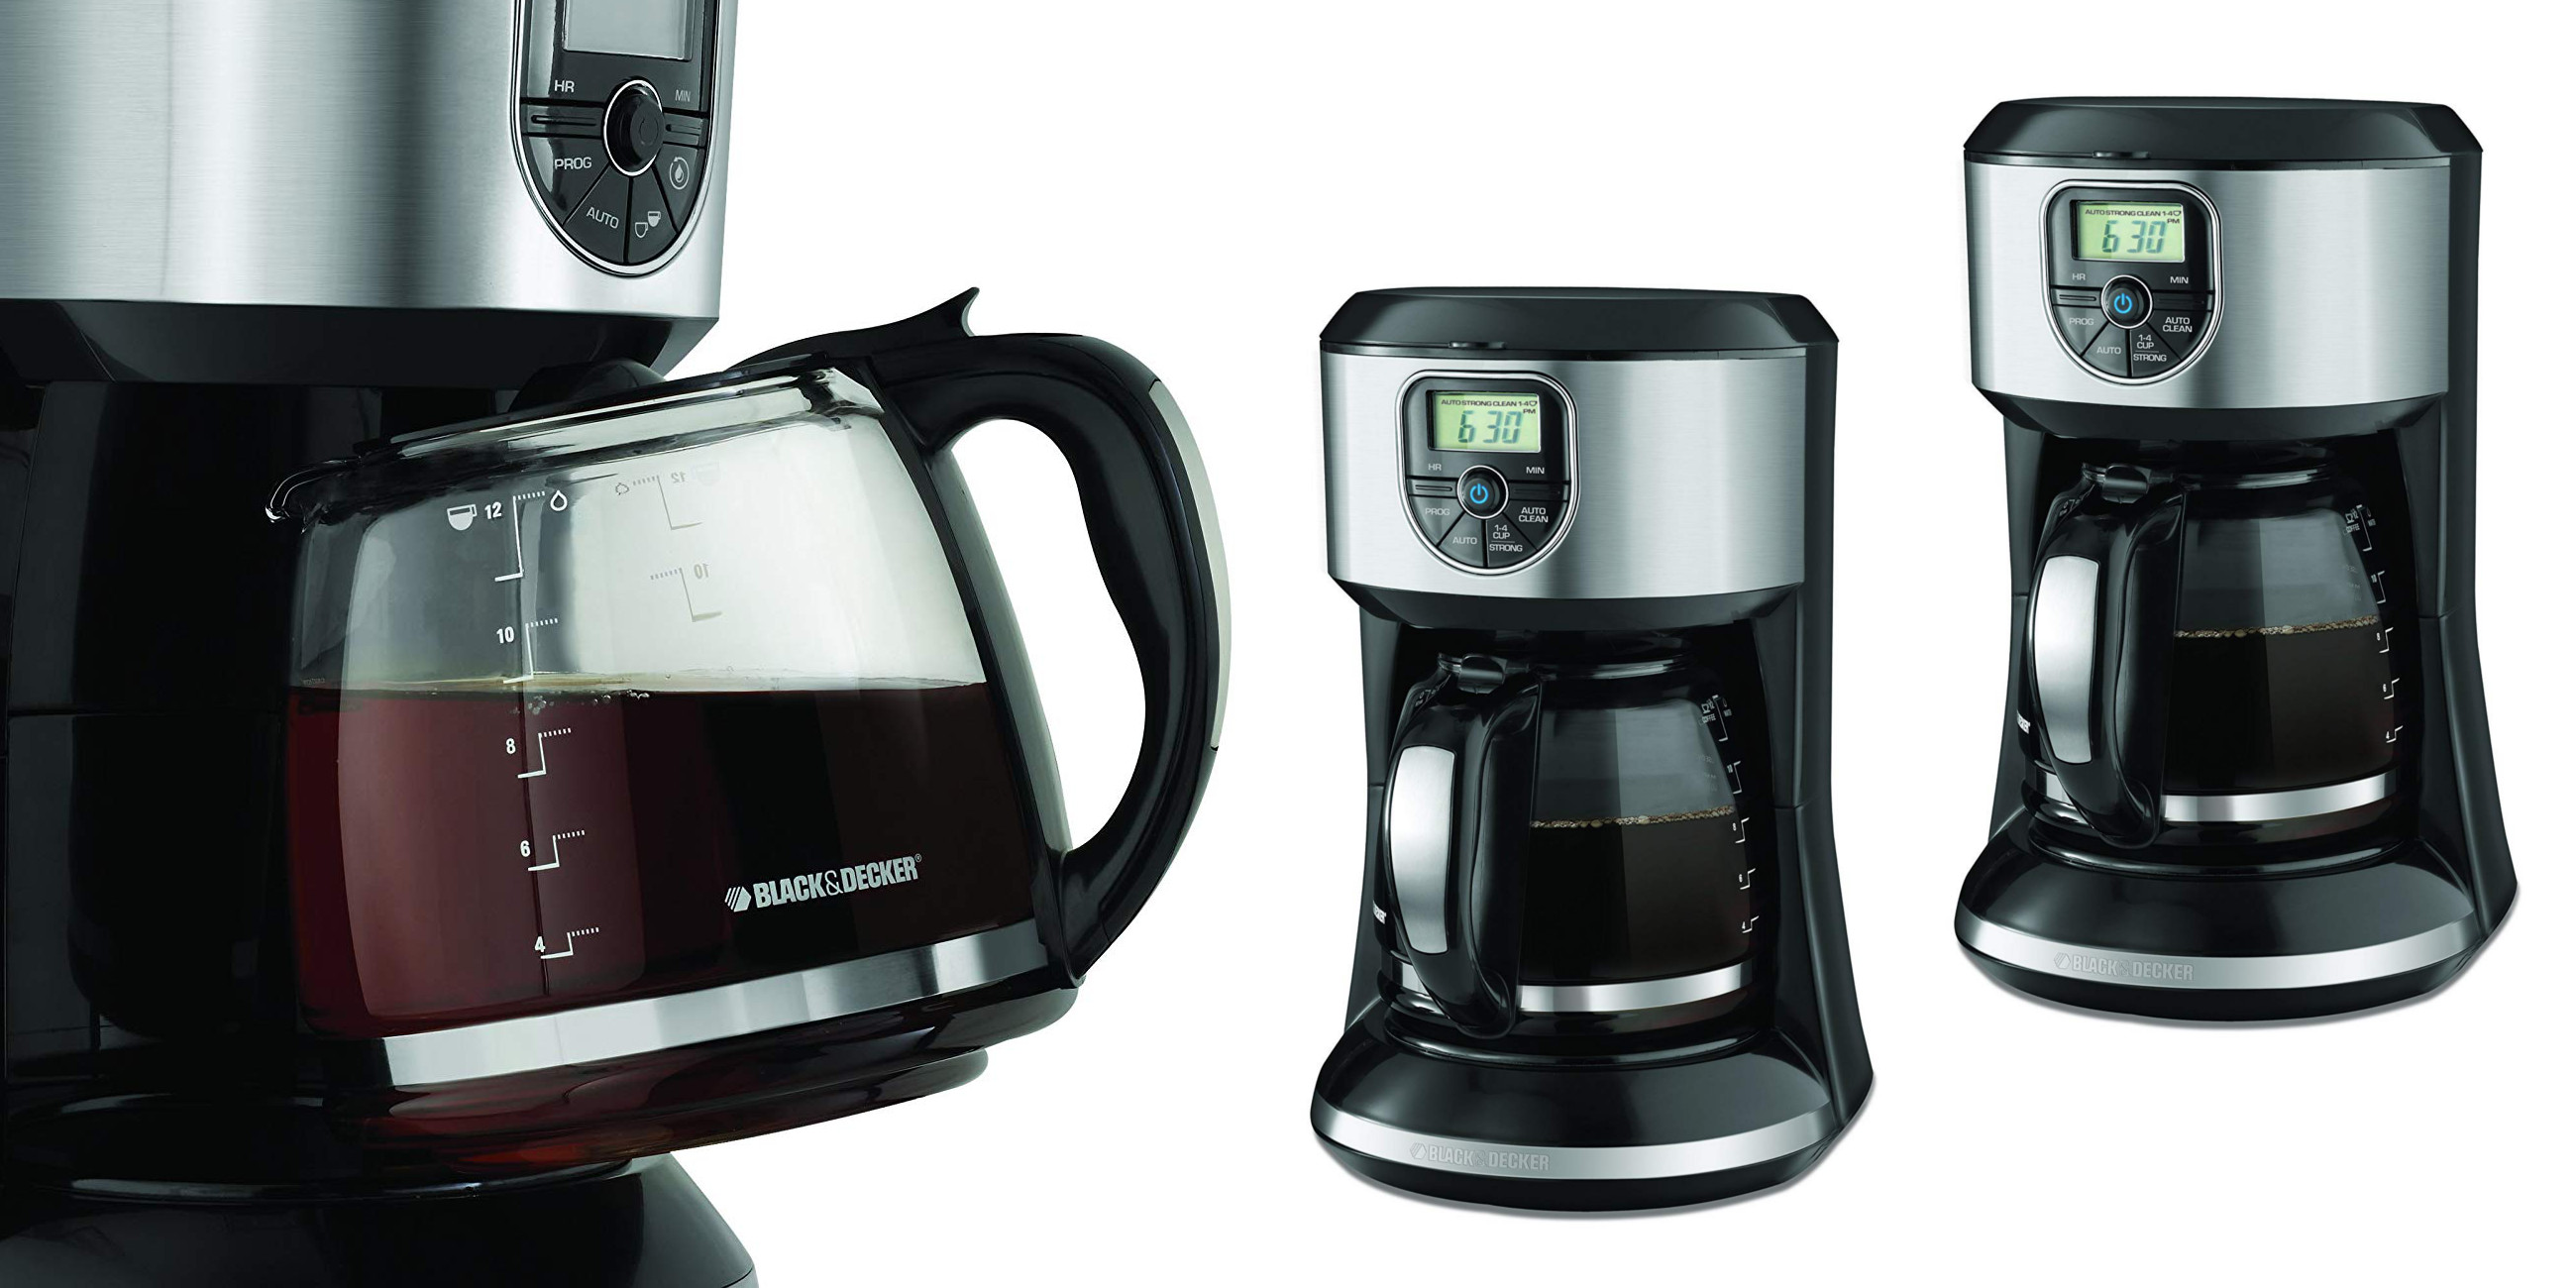 https://9to5toys.com/wp-content/uploads/sites/5/2019/02/Black-Decker-12-Cup-Coffee-Maker-Black-Silver-CM4000S.jpg